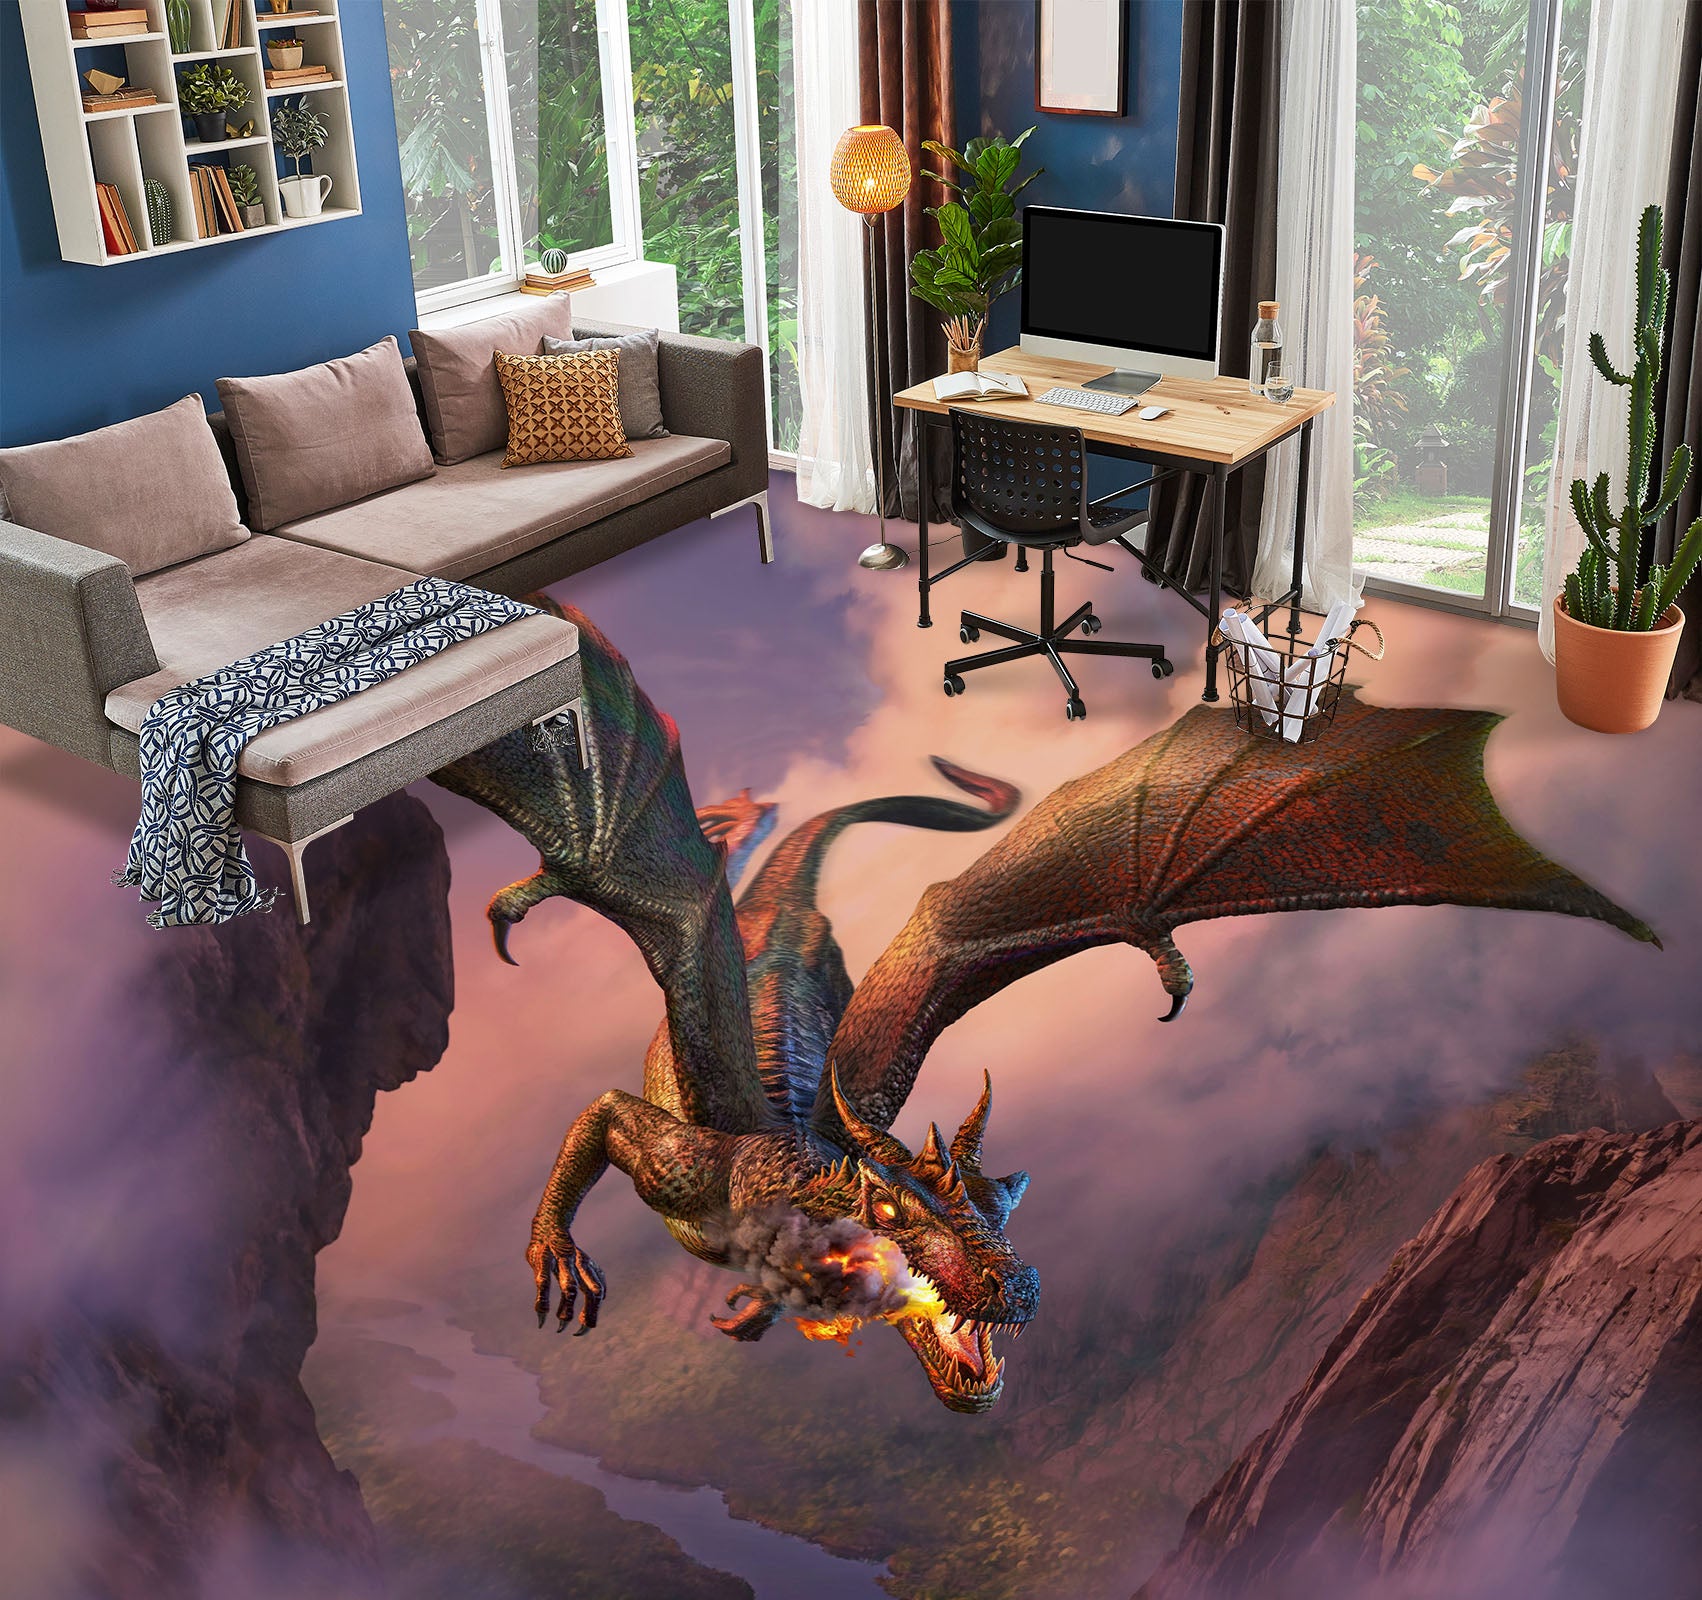 3D Flying Dragon 96219 Jerry LoFaro Floor Mural